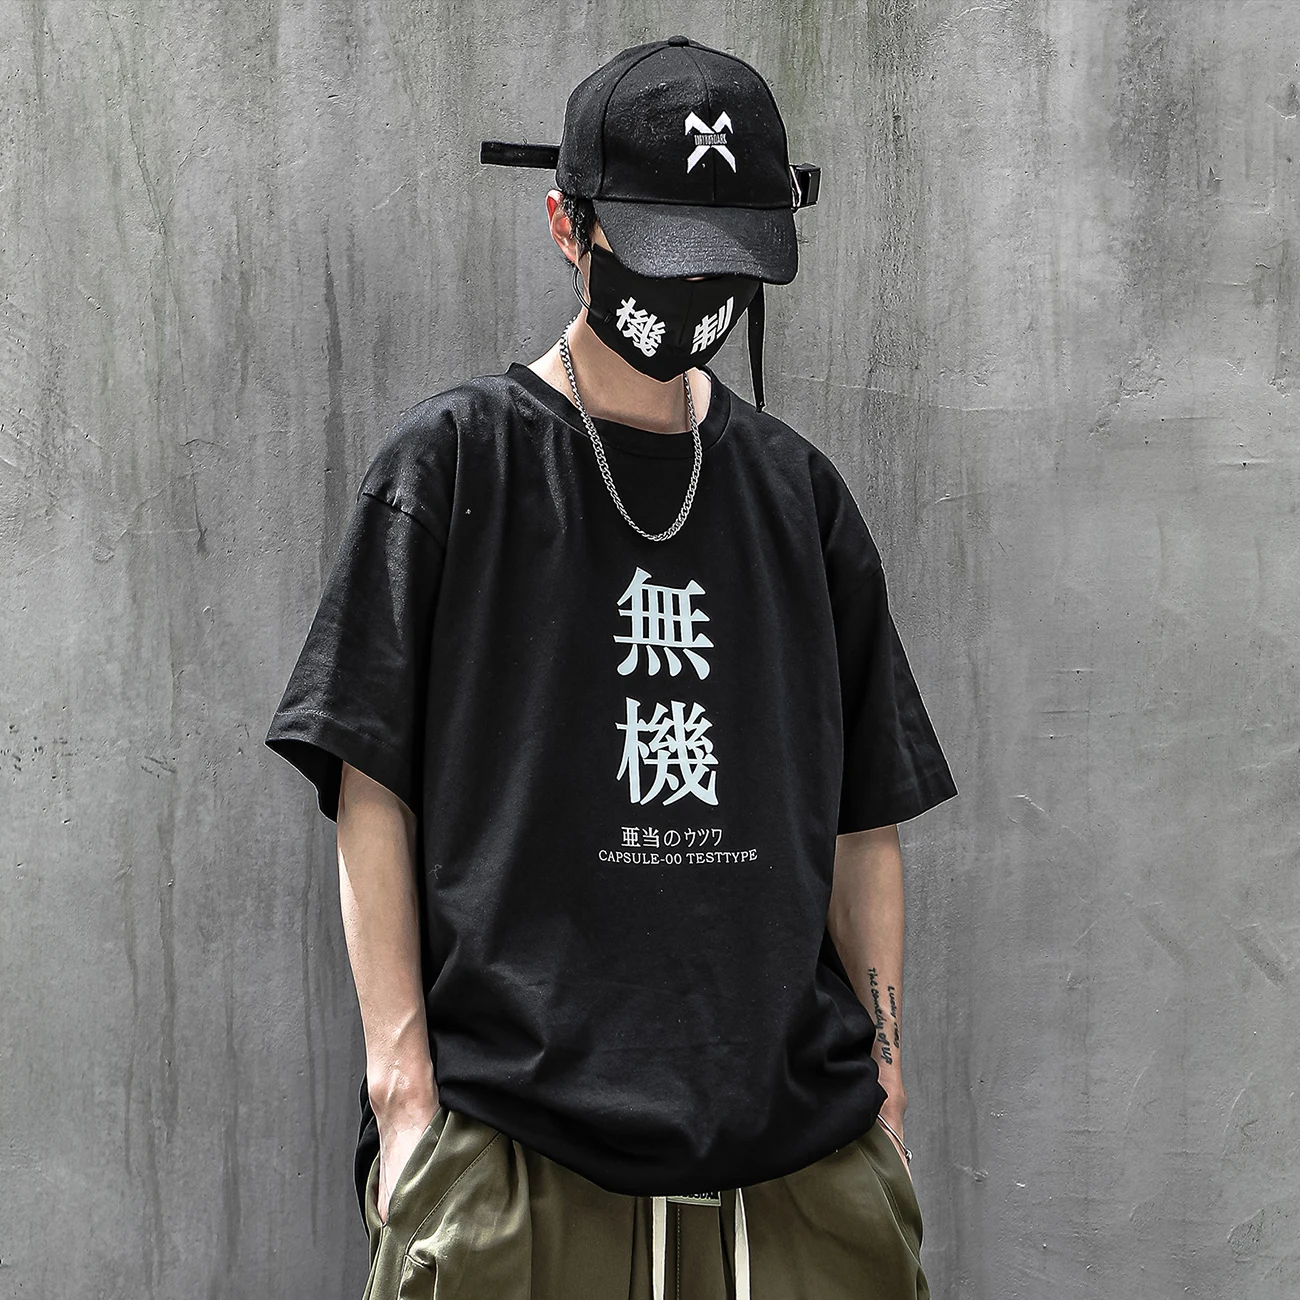 11 BYBB S DARK Dark Embroidery Hip Hop T Shirt Men Summer Cotton Loose Shirts Short Sleeve Shirts 2021SS Streetwear Harajuku Tshirt Men